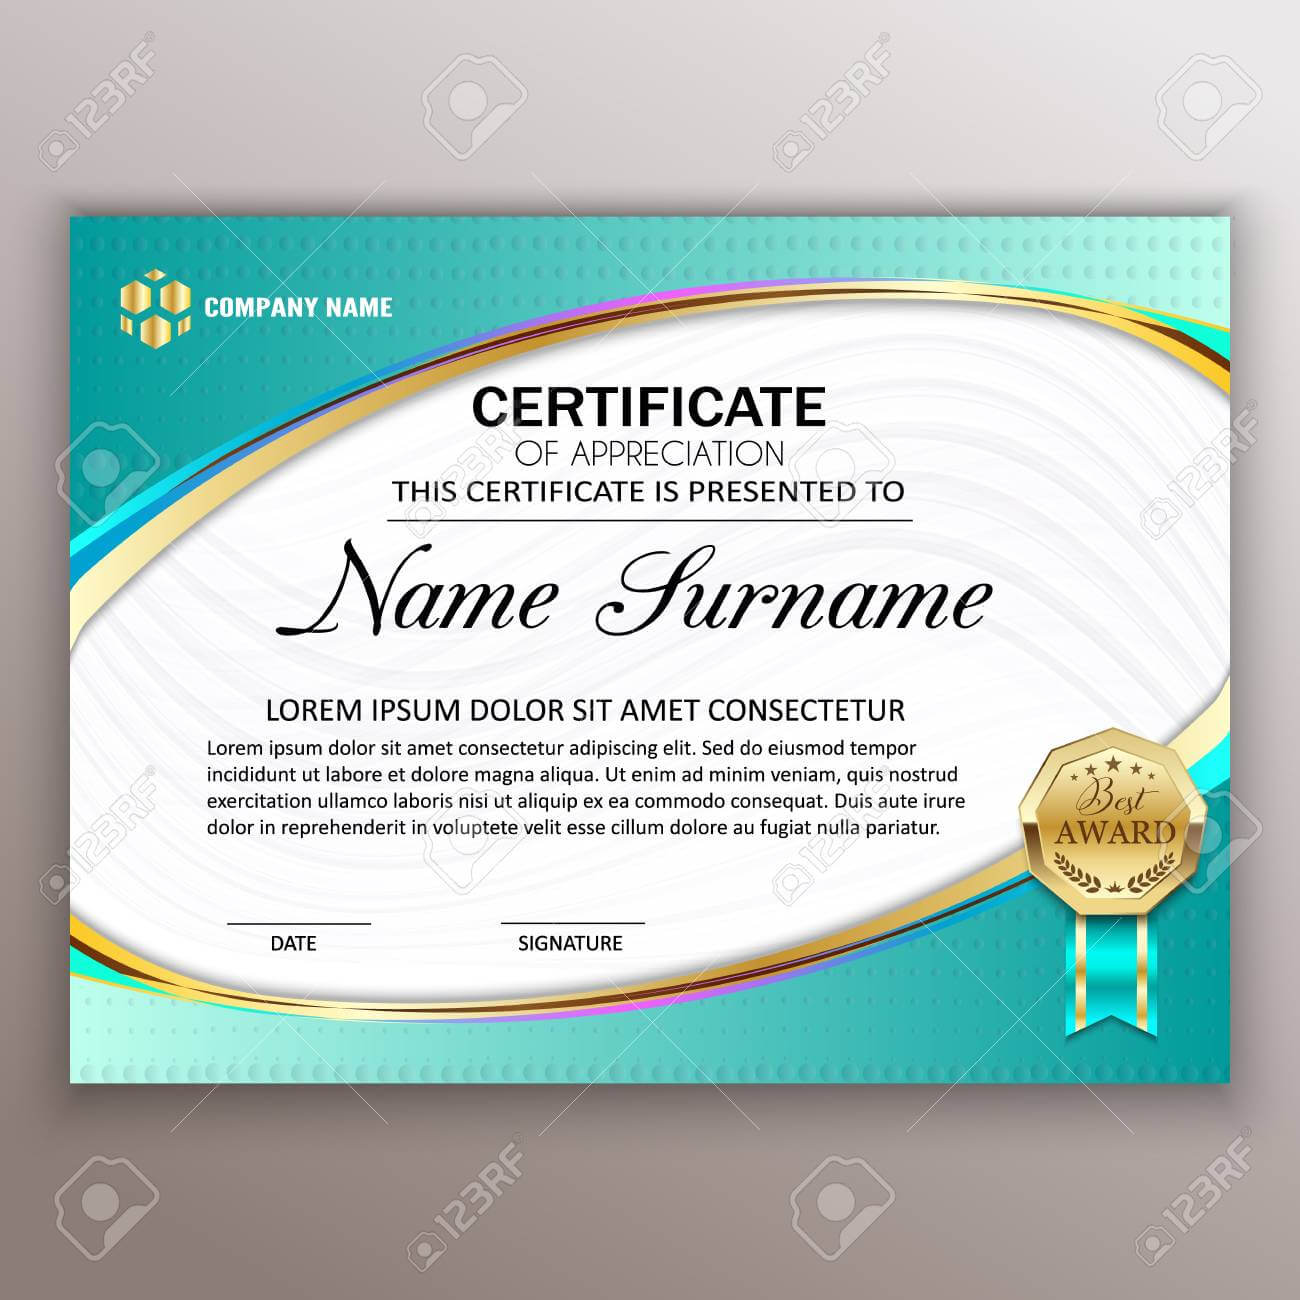 Beautiful Certificate Template Design With Best Award Symbol For Beautiful Certificate Templates